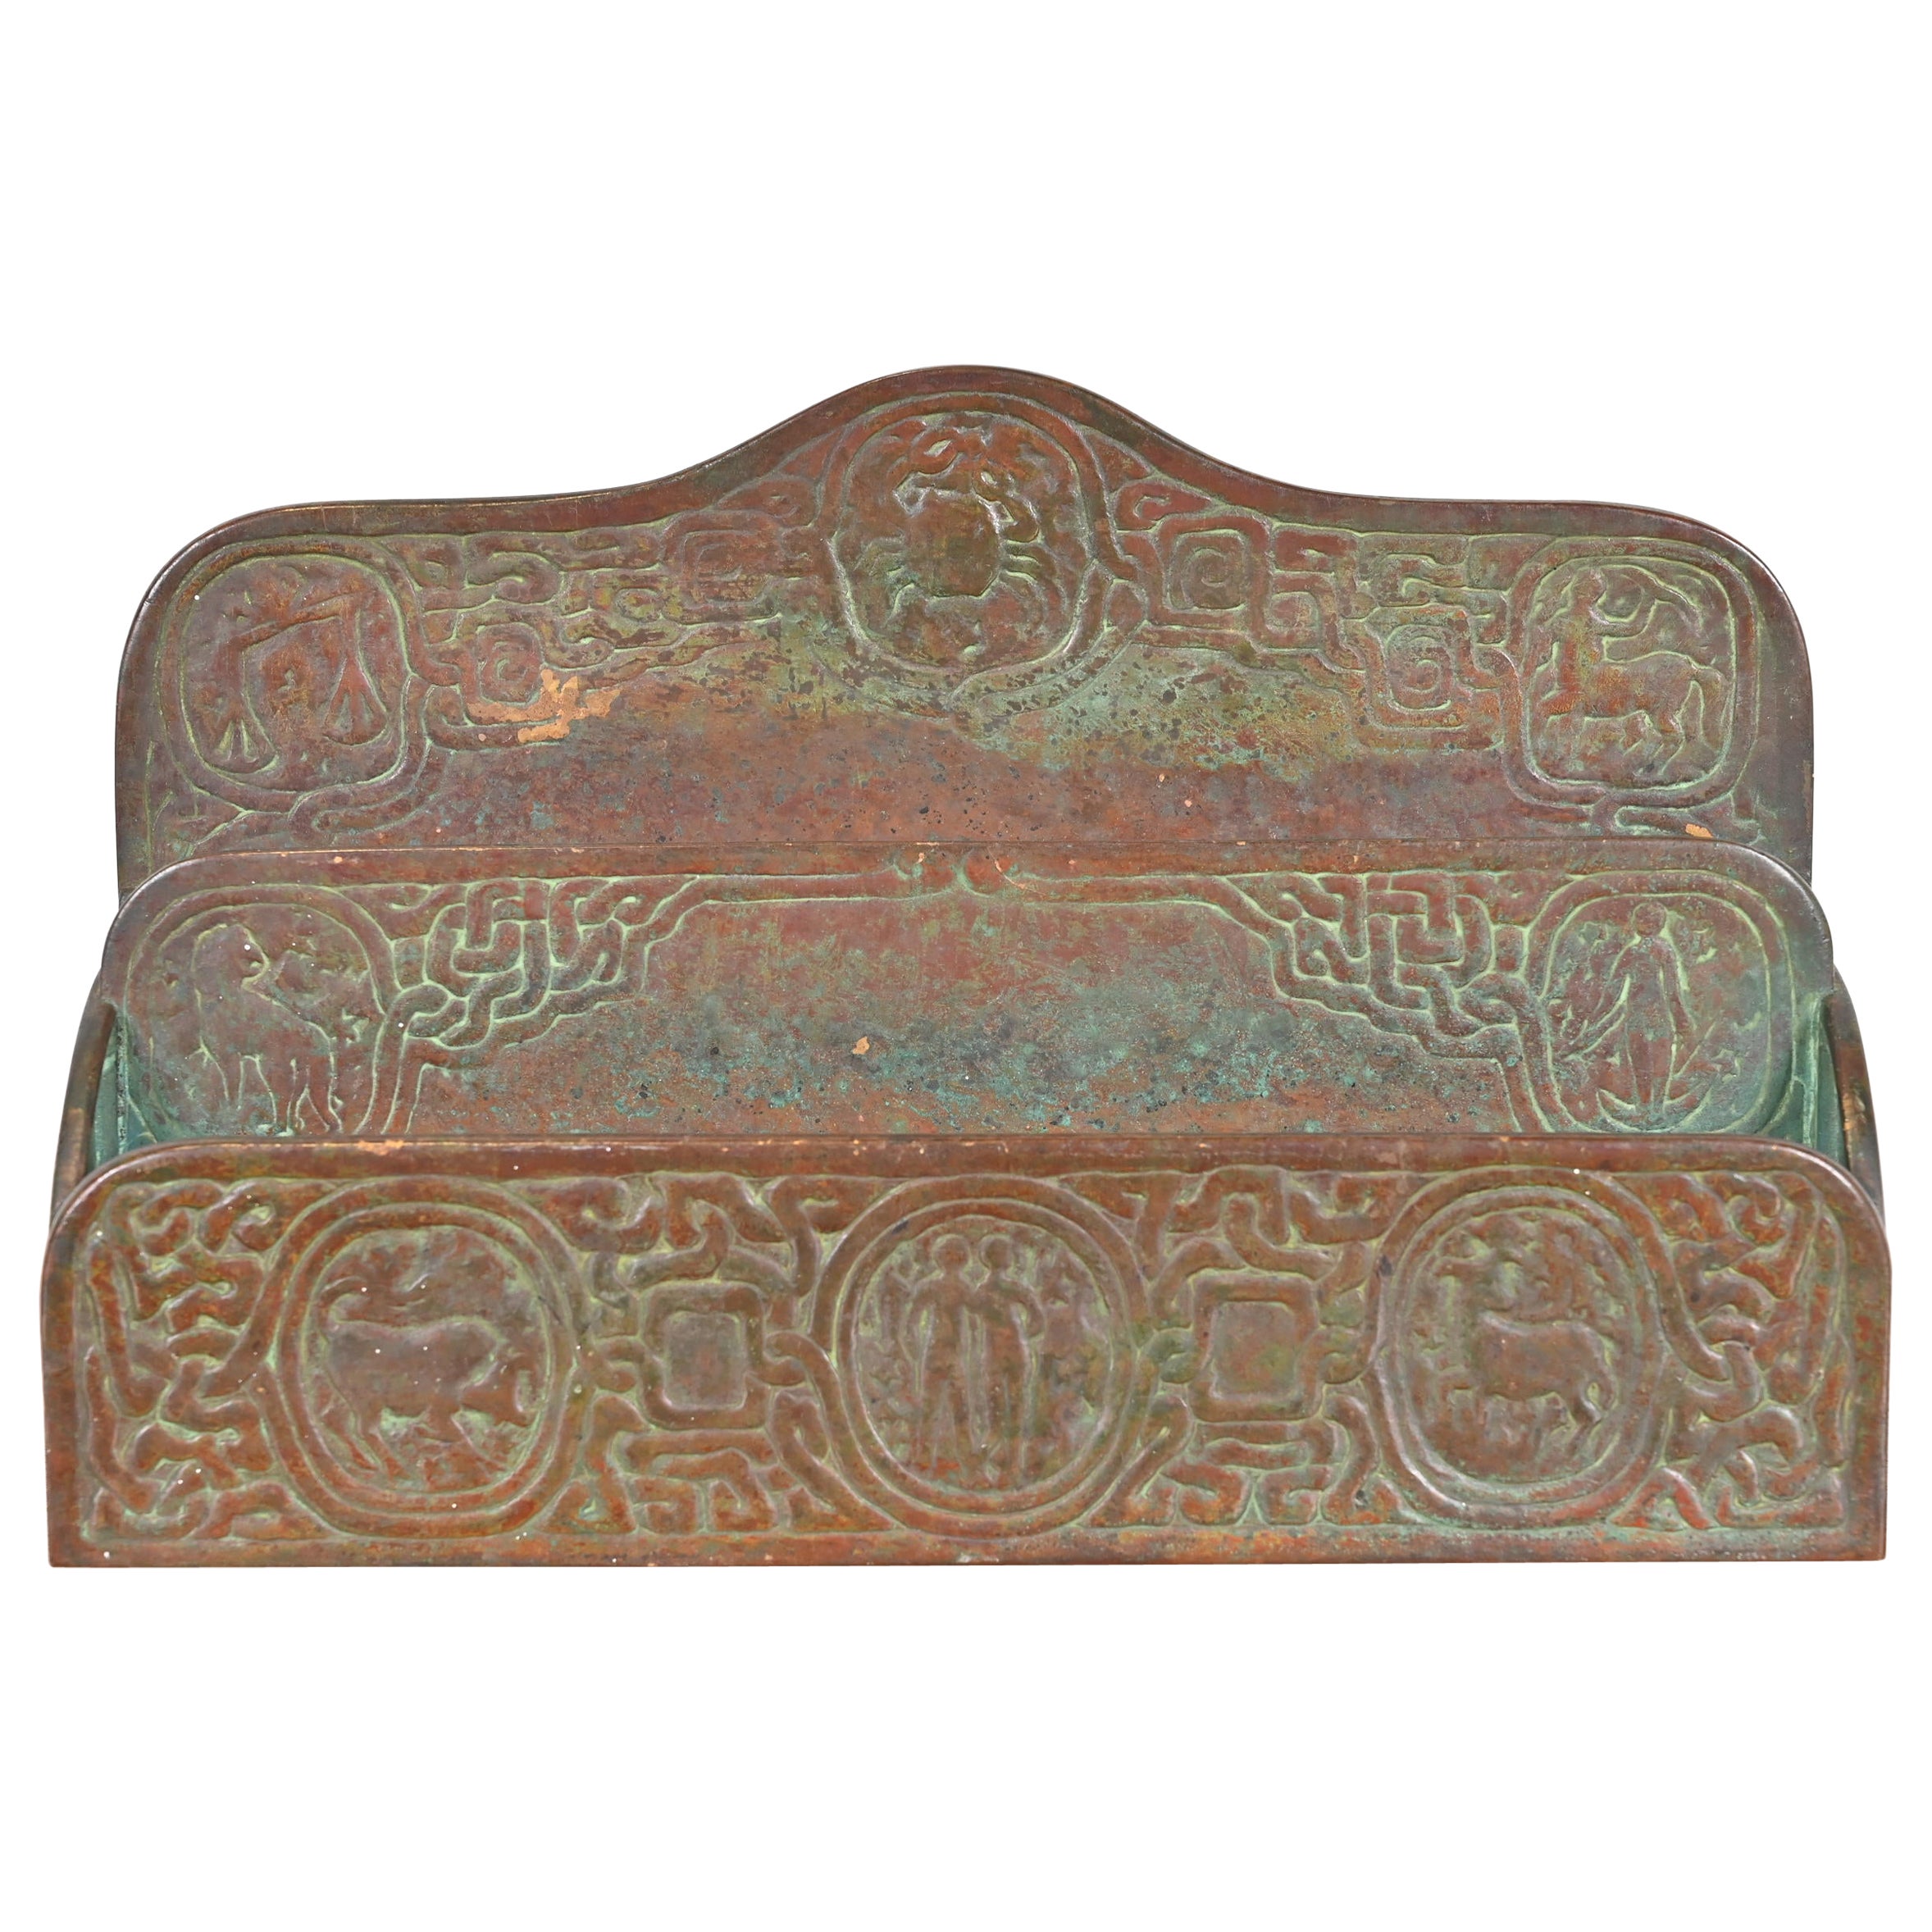 Tiffany Studios New York Zodiac Patinated Bronze Letter Rack, Circa 1910